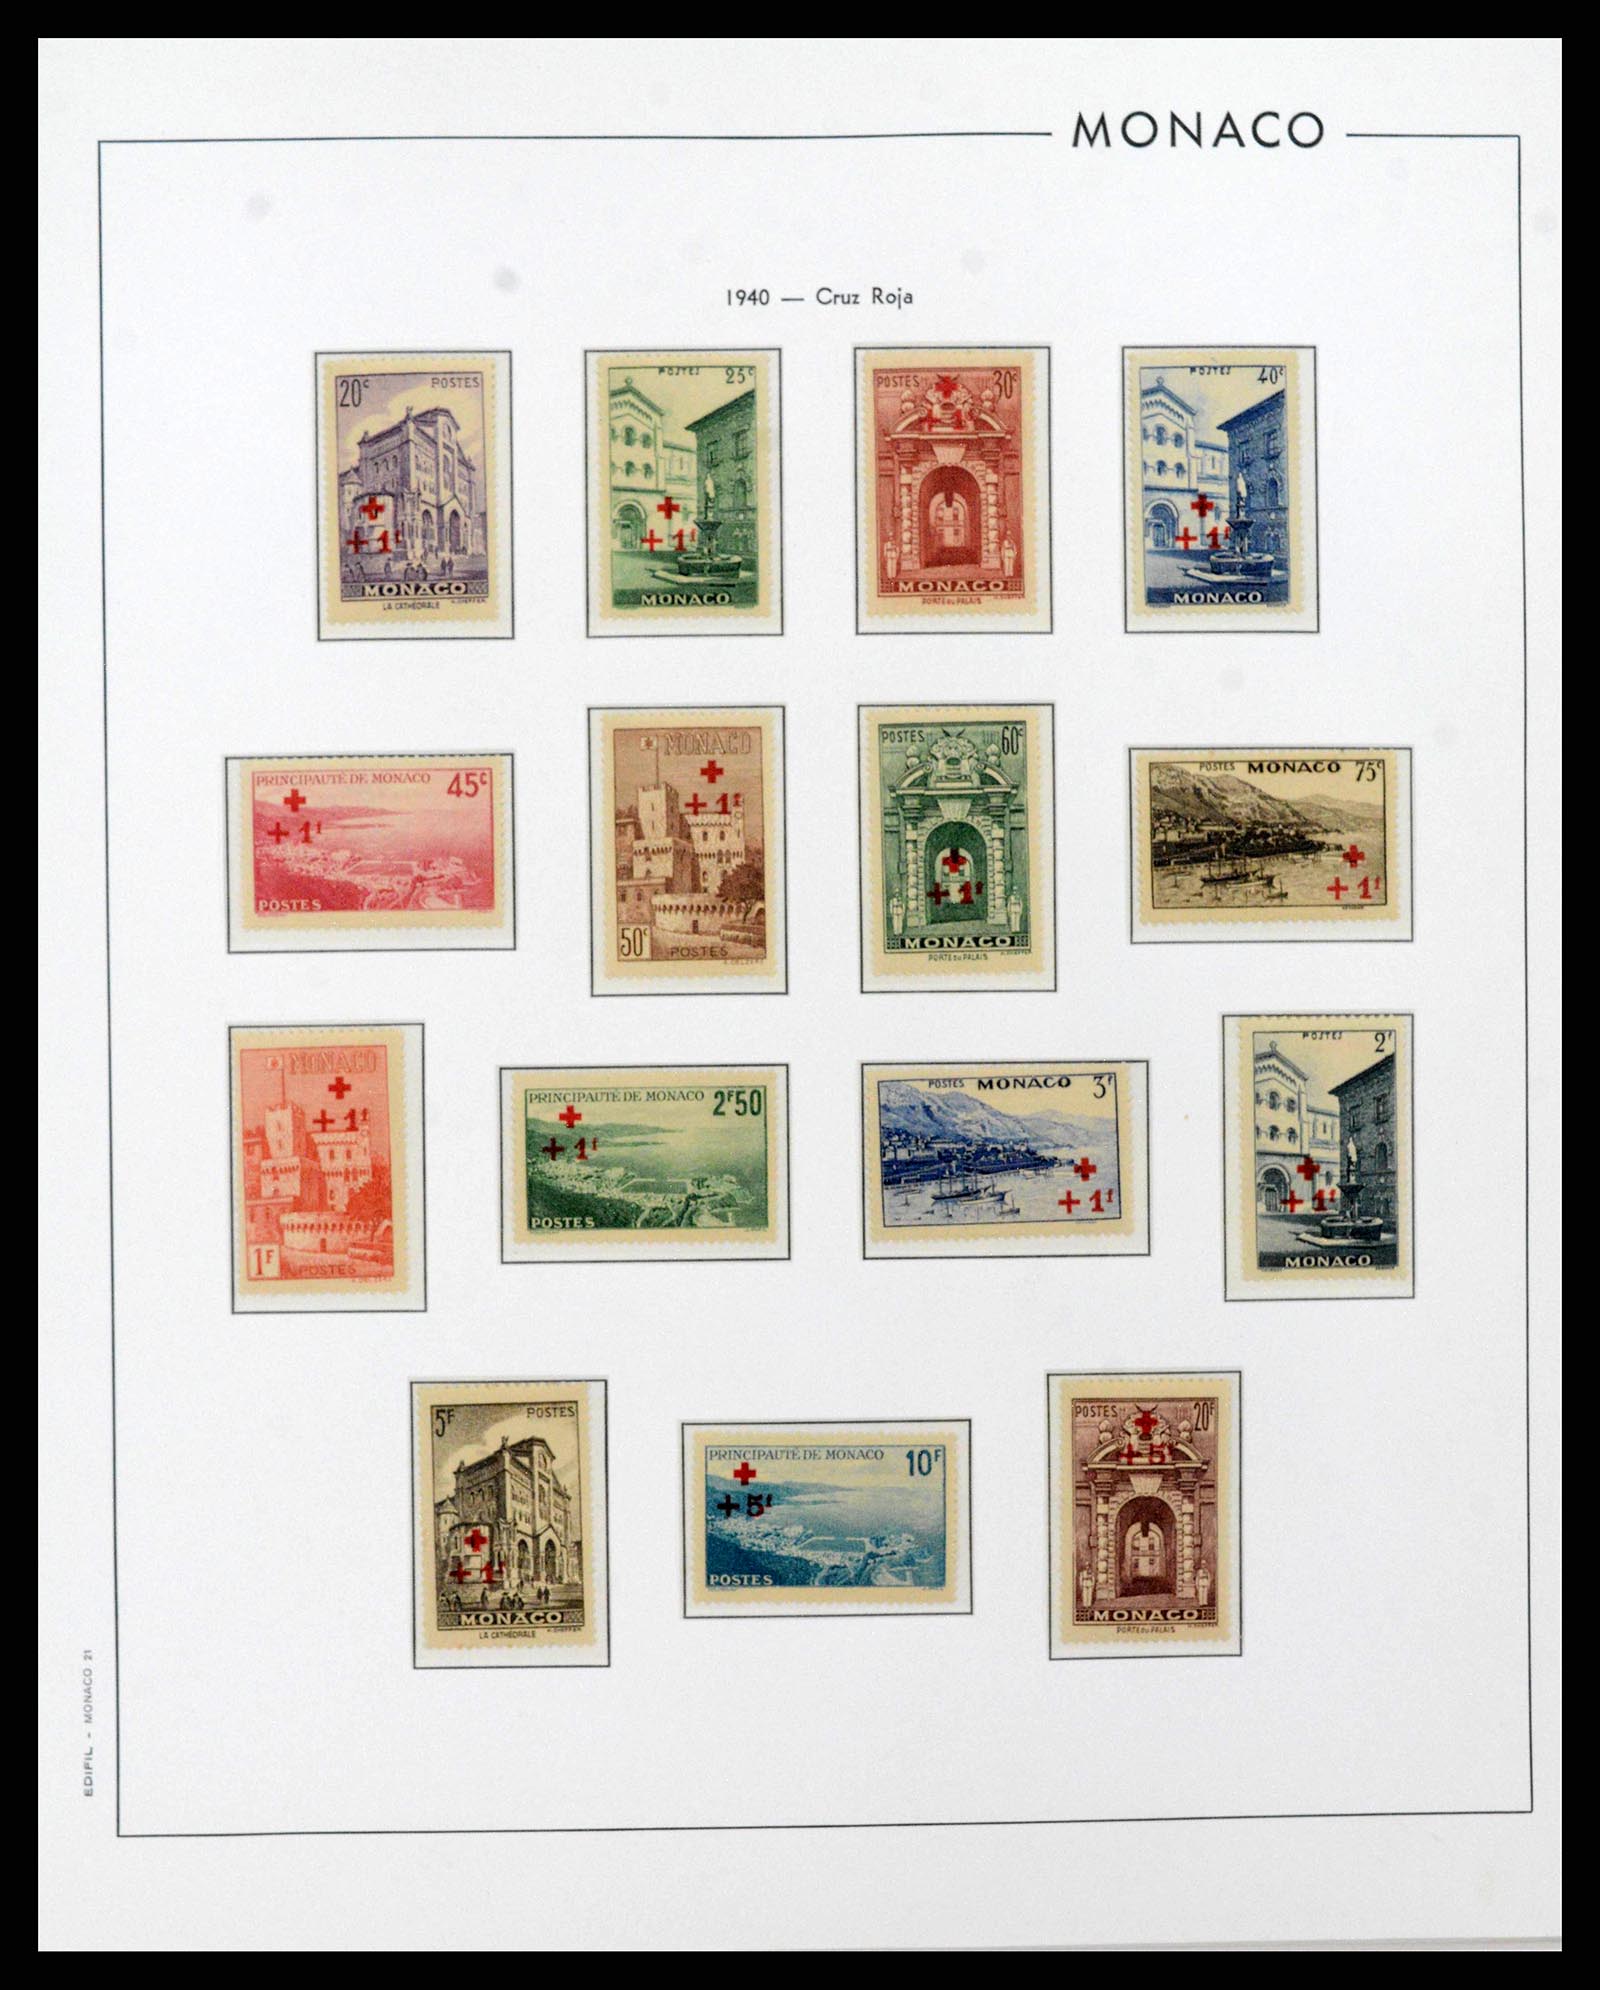 38283 0020 - Stamp collection 38283 Monaco 1885-1989.